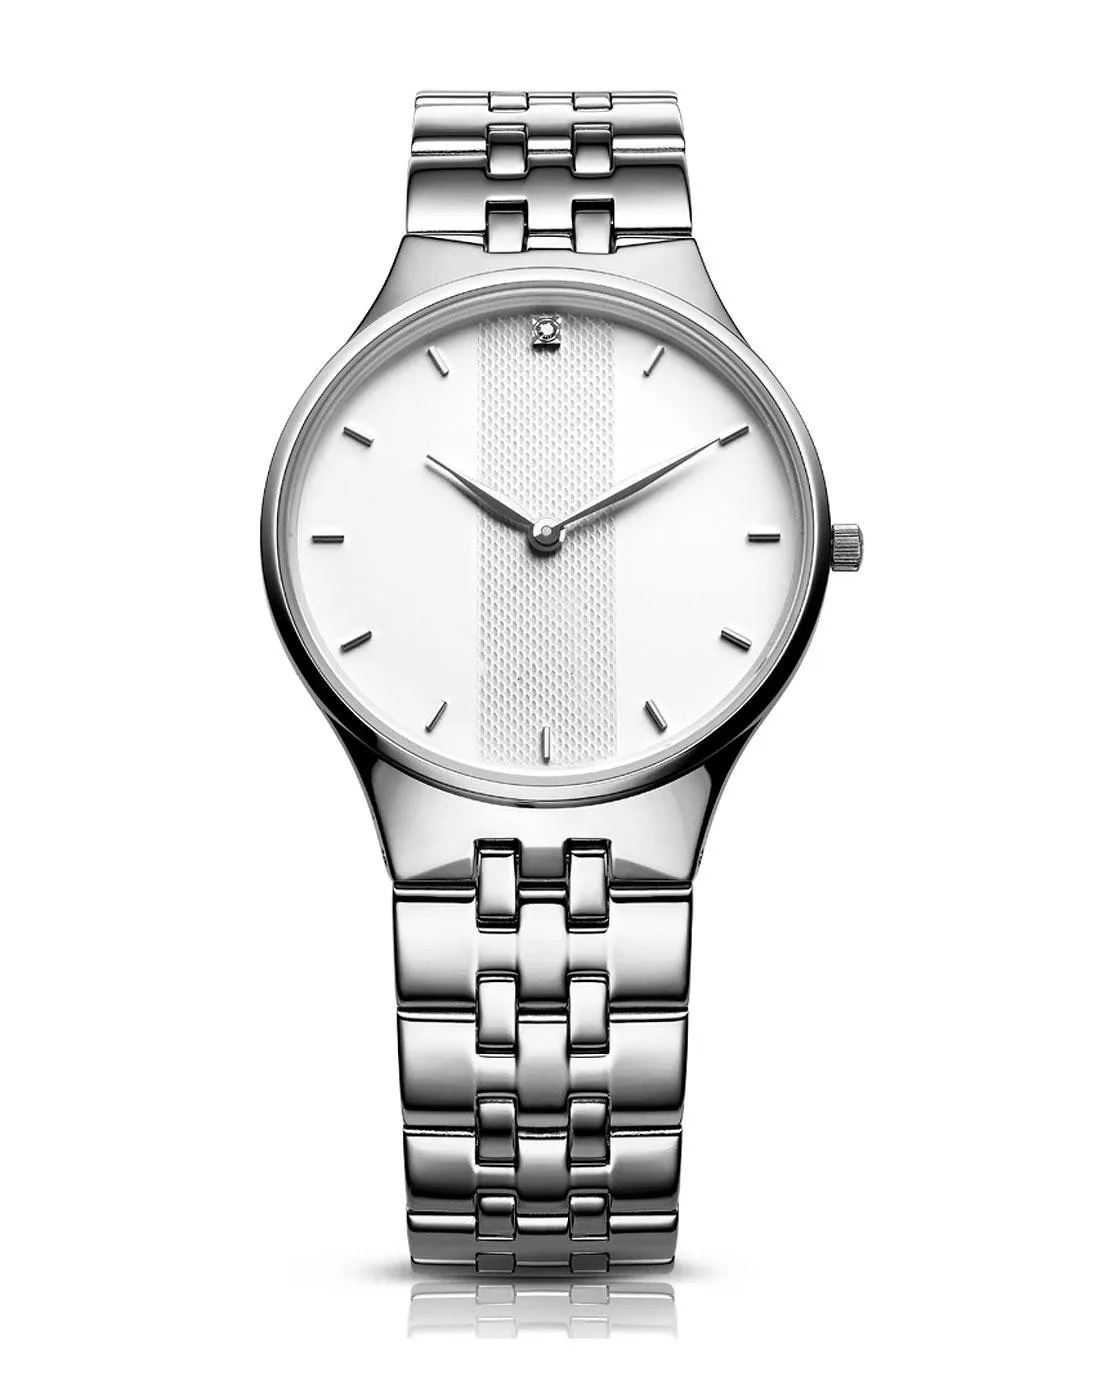 

OMJ034 Luxury Brand New Watches Men Ceramic Bezel Stainless Steel 40mm Rubber strap Quartz watch AAA+ Watch 9891